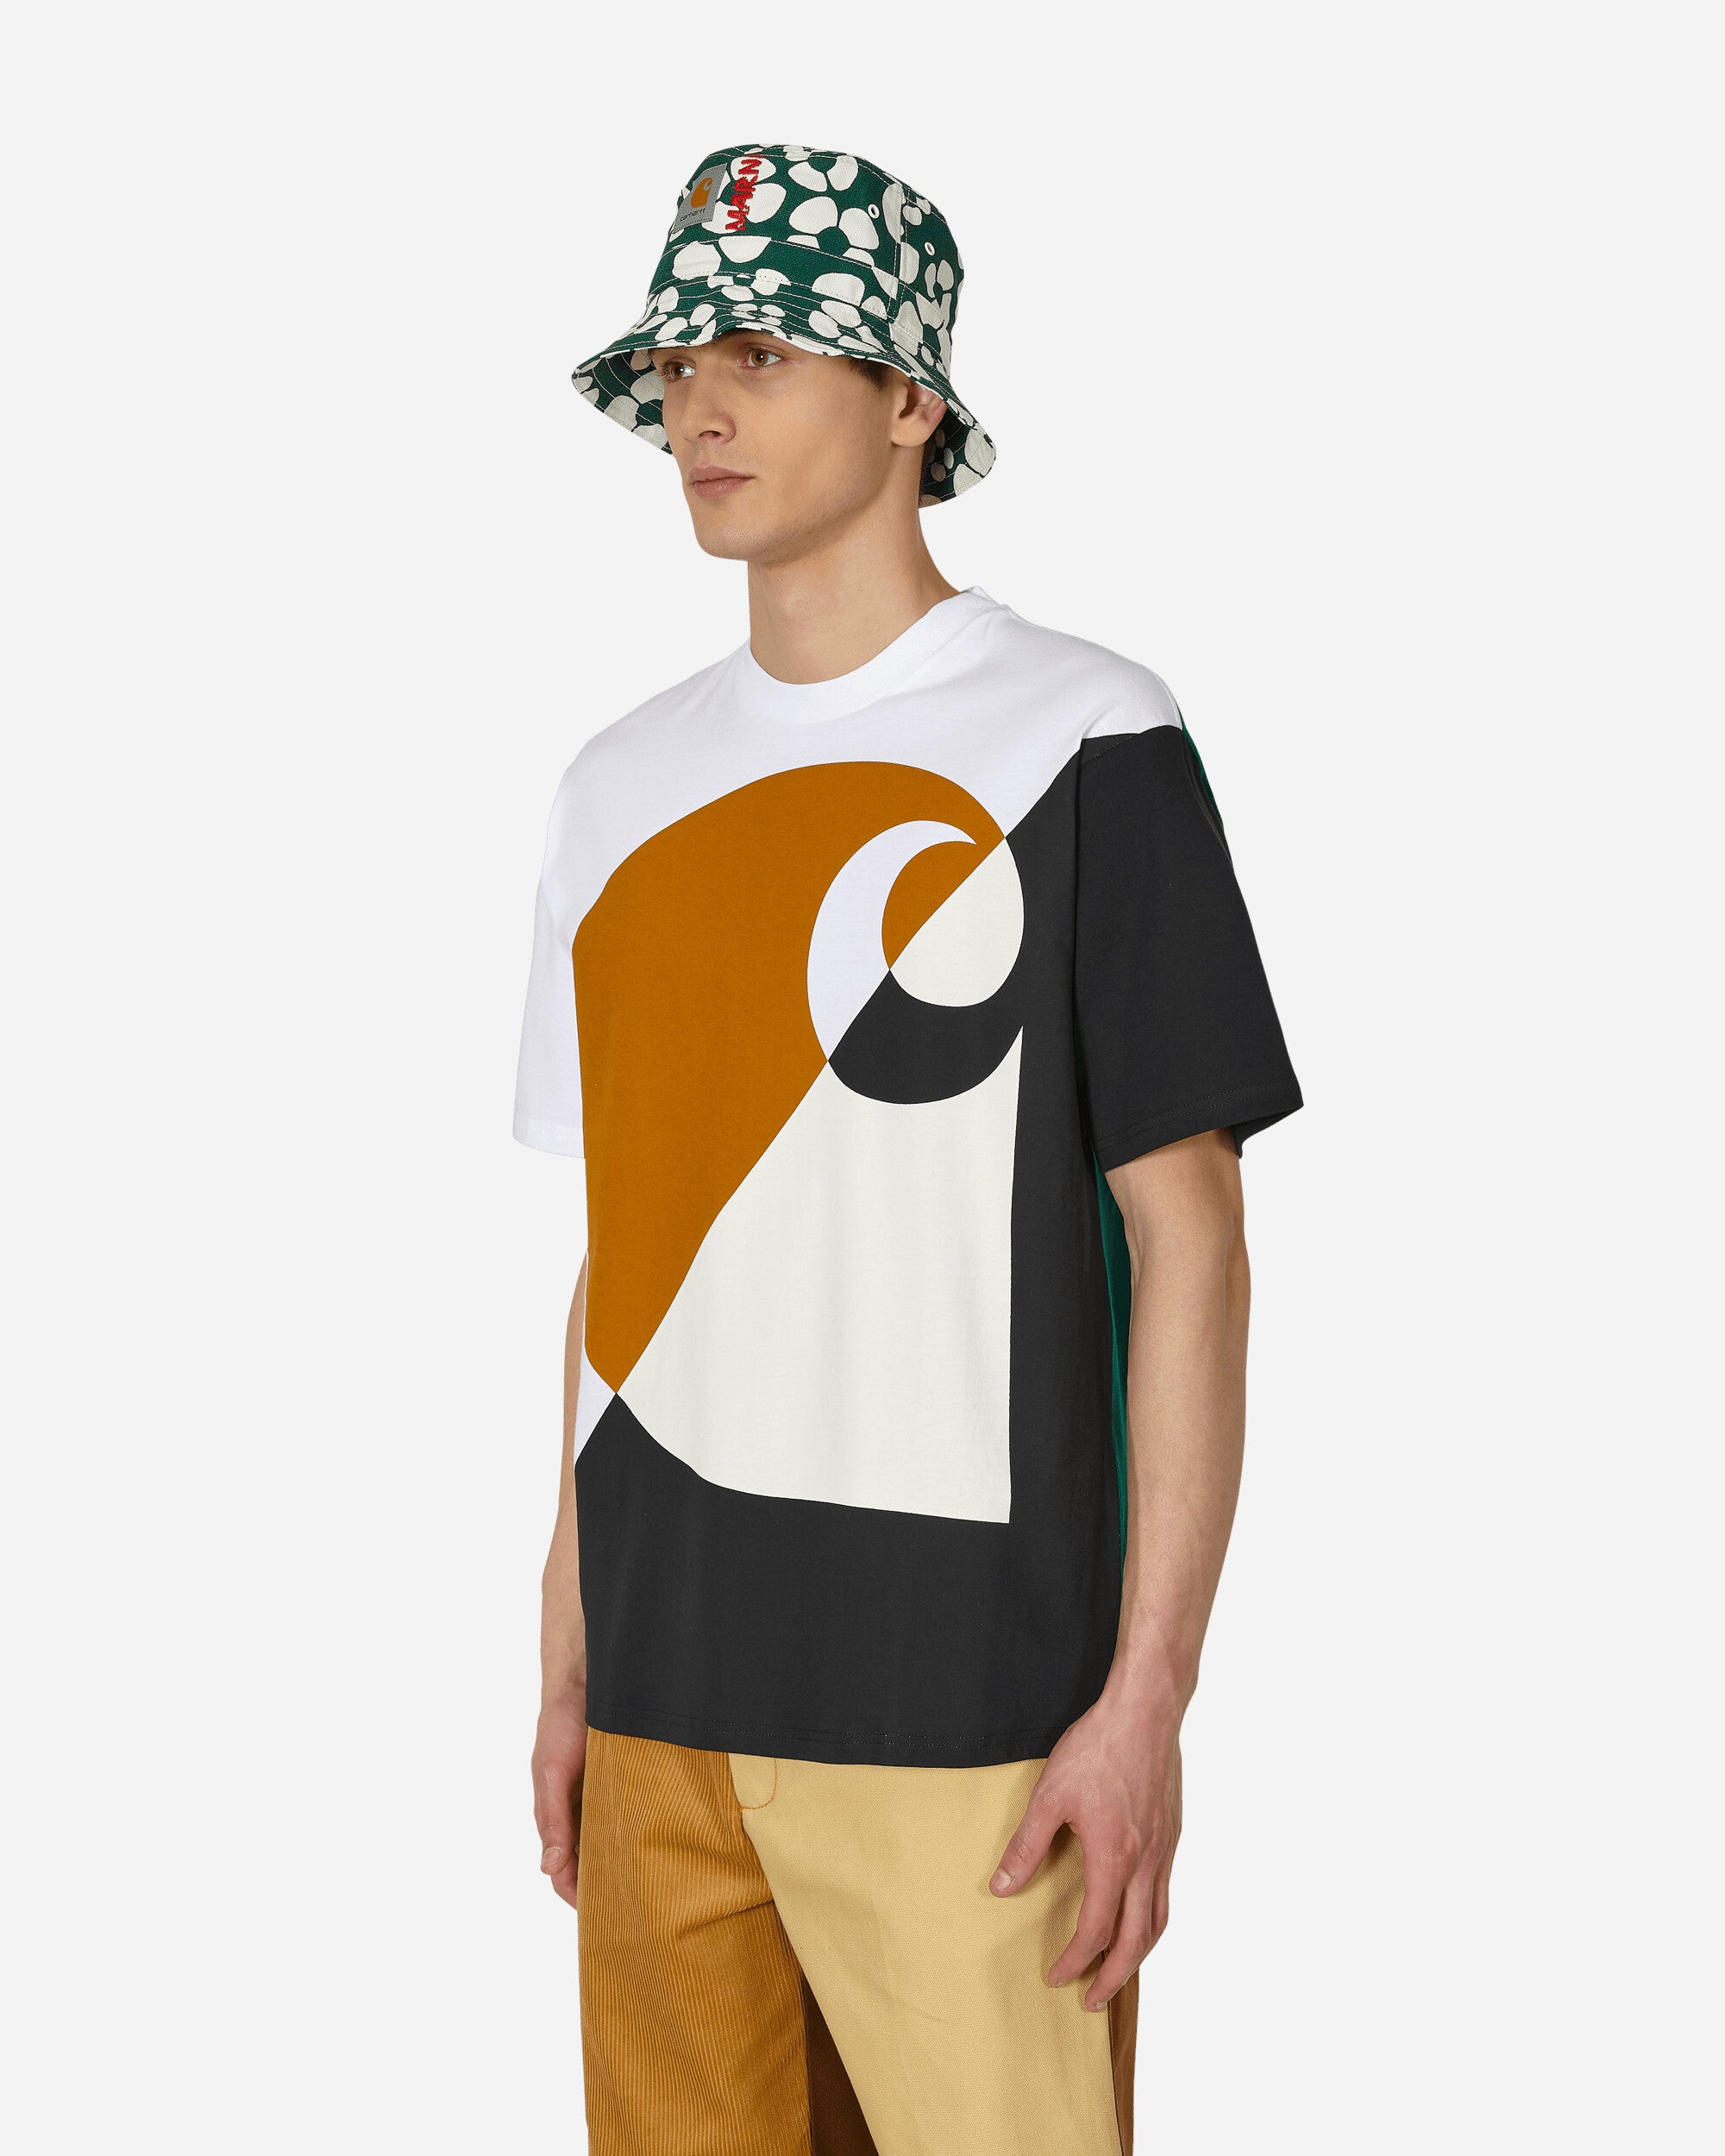 MARNI × carharttwip LOGO T-shirtロゴ Tシャツ | labiela.com